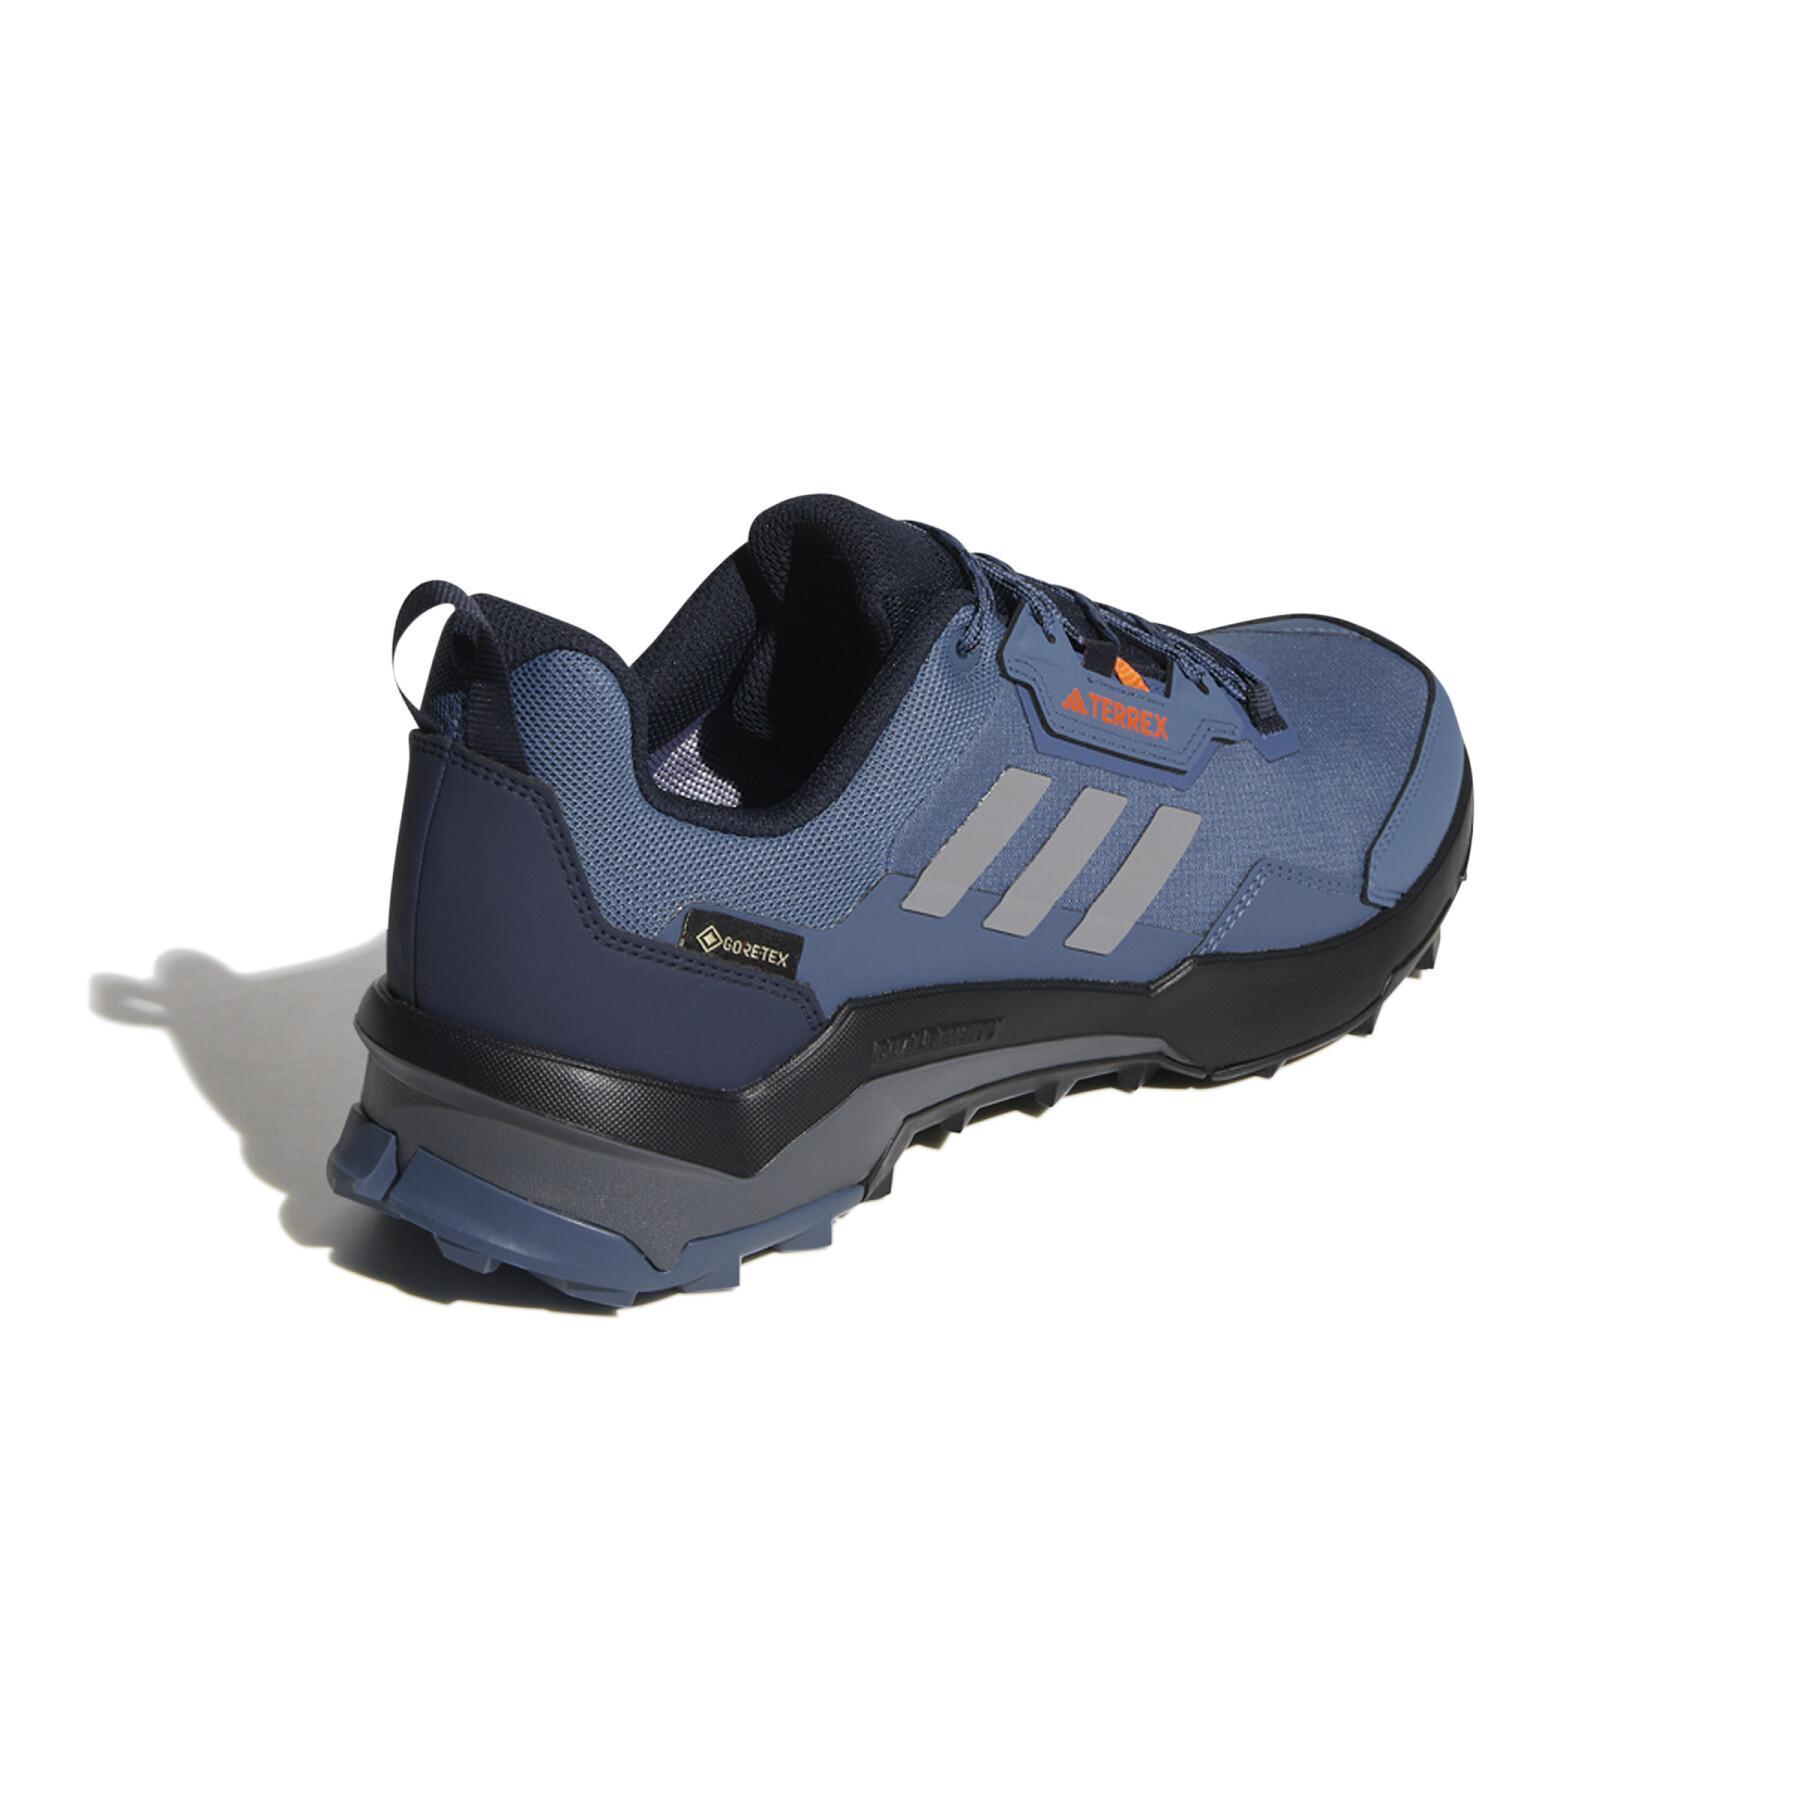 Chaussures de randonnée adidas Terrex Ax4 Gtx